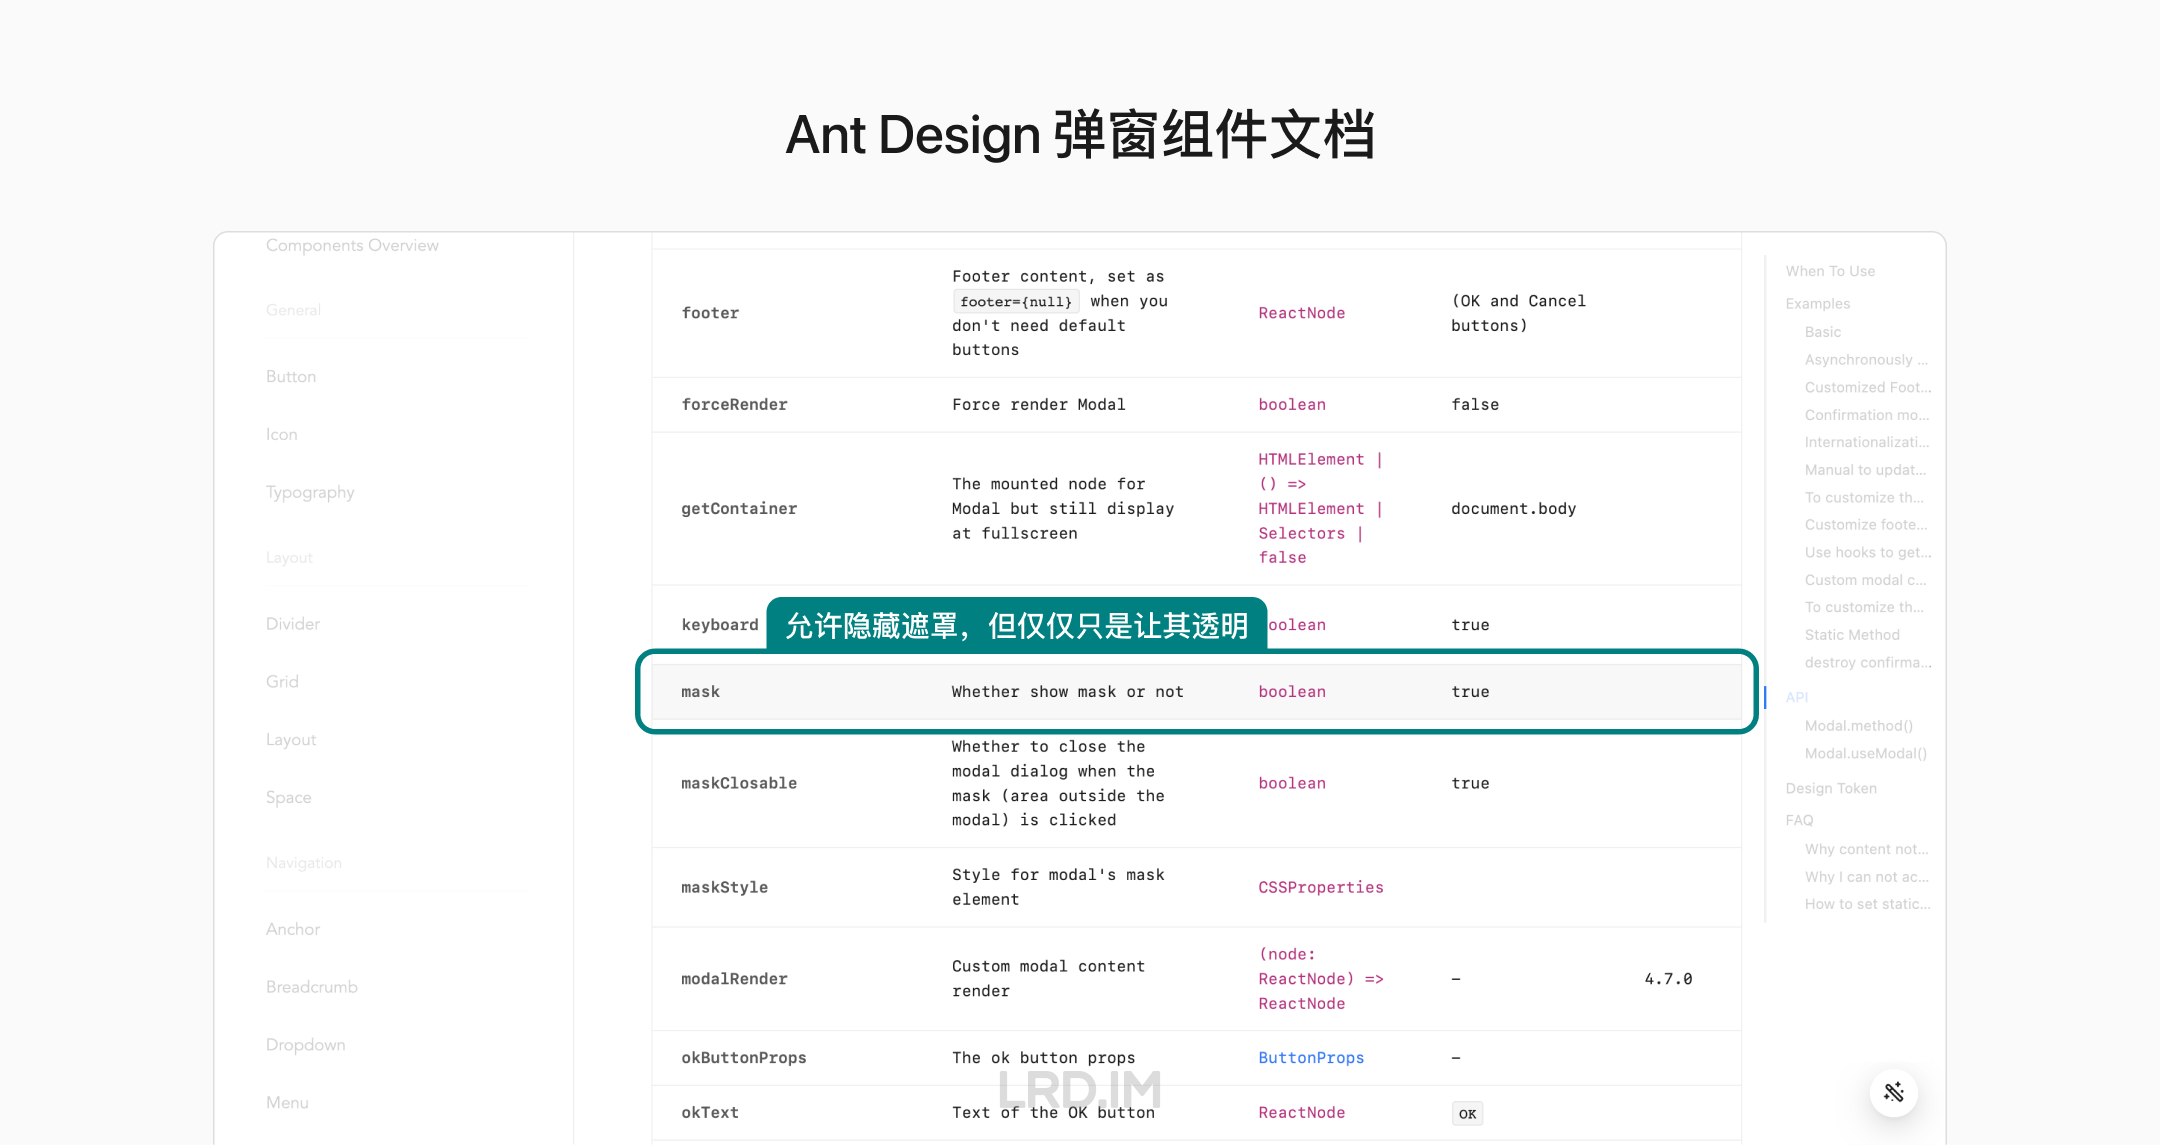 Ant Design Modal 组件的 API 截图。用带有圆角的绿色边框高亮 Ant Design Modal的 API。该 API 控制是否展示 Mask，默认是展示的。